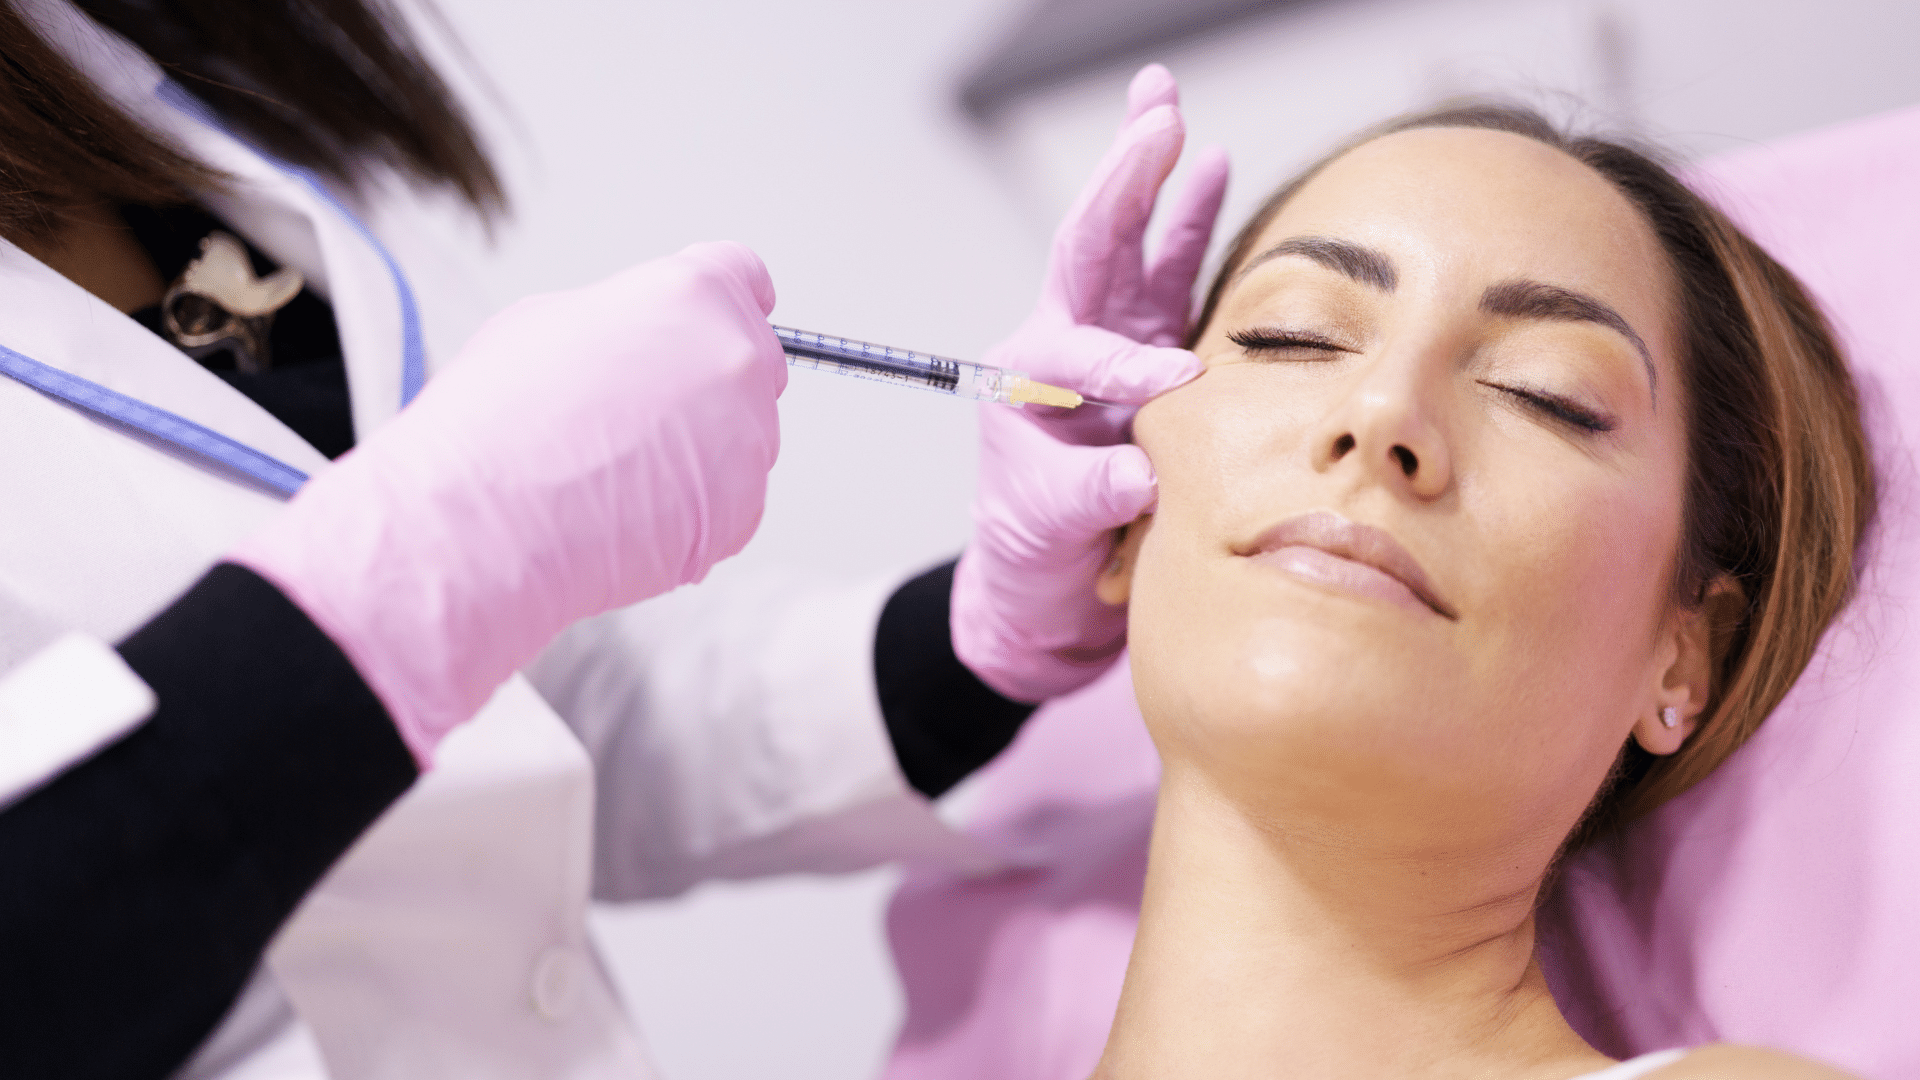 Woman getting facial treatment.